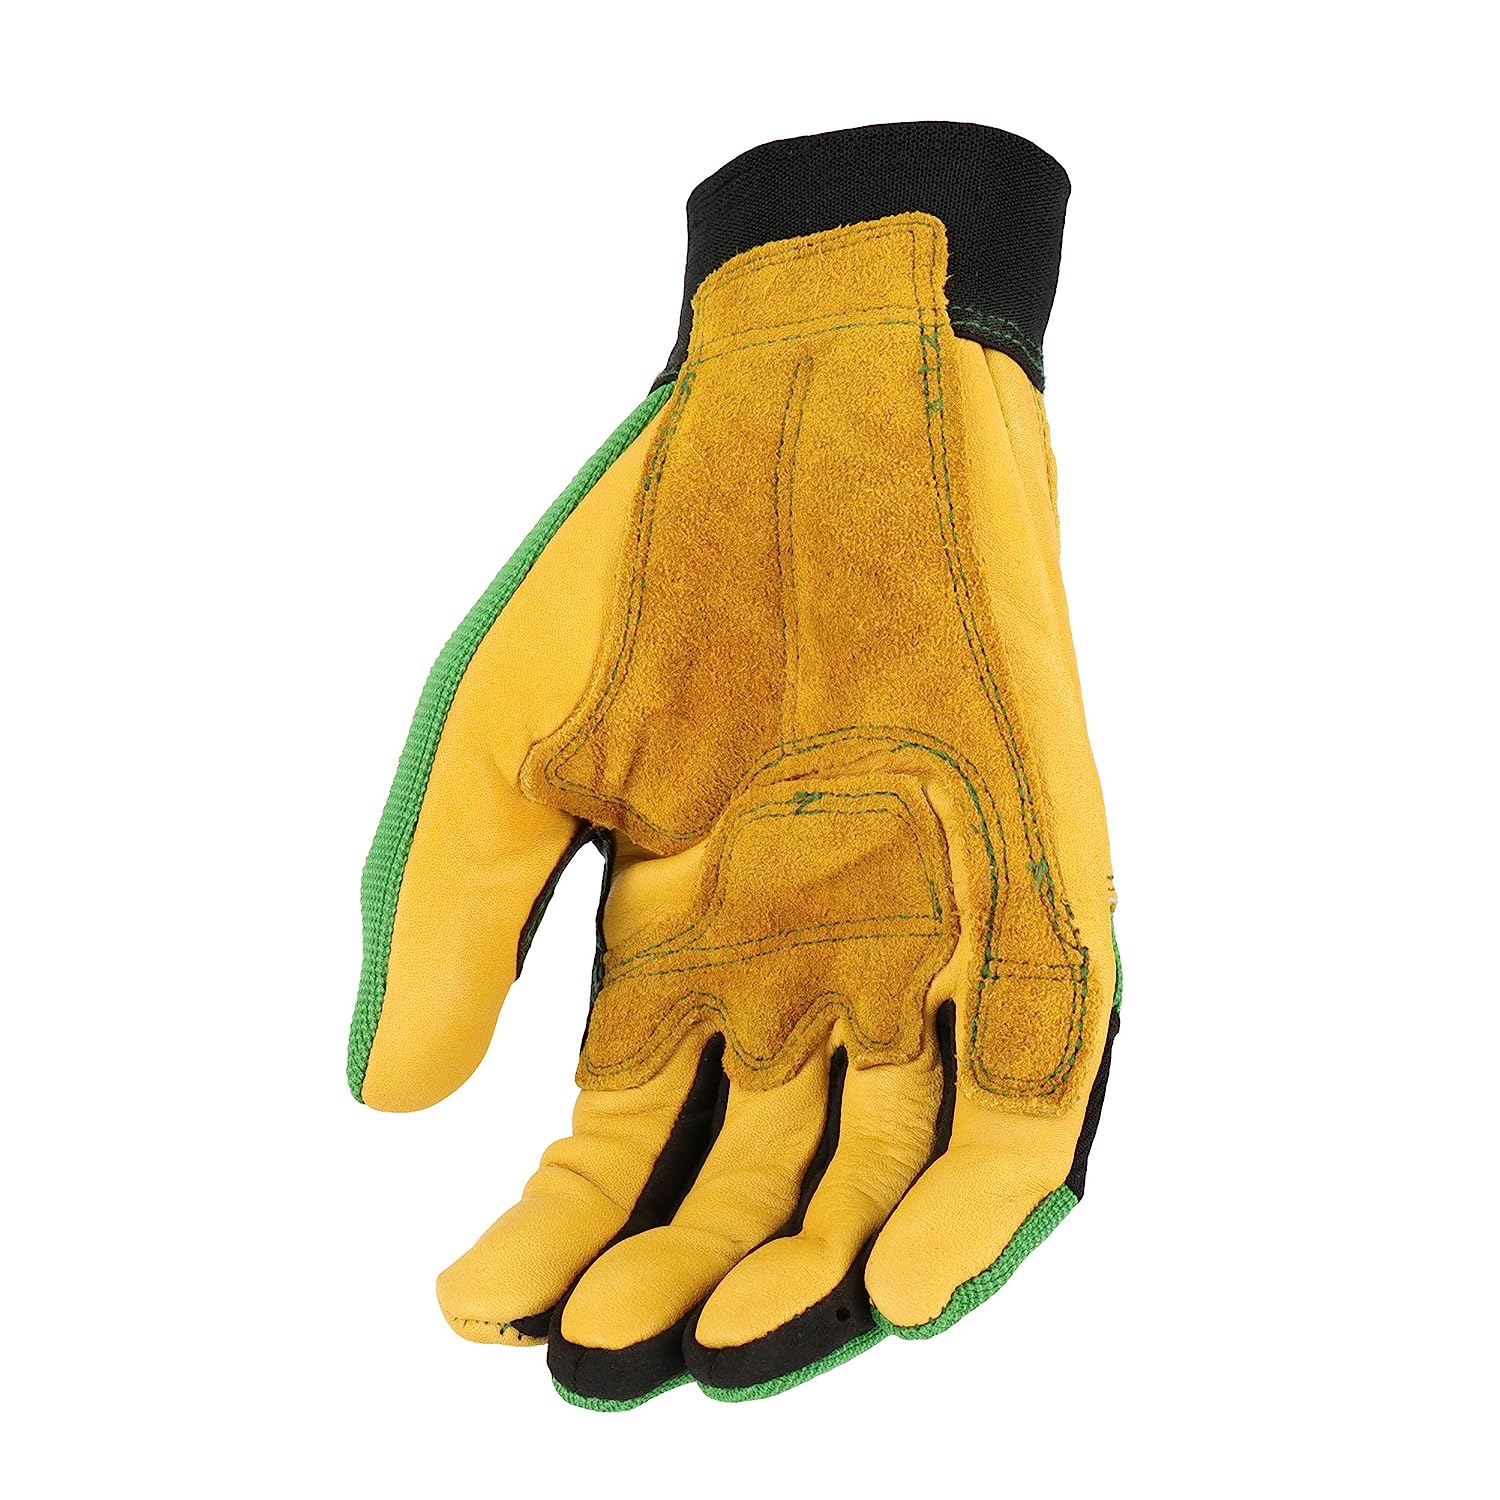 John Deere Grain Cowhide Leather Work Gloves - RDO Equipment